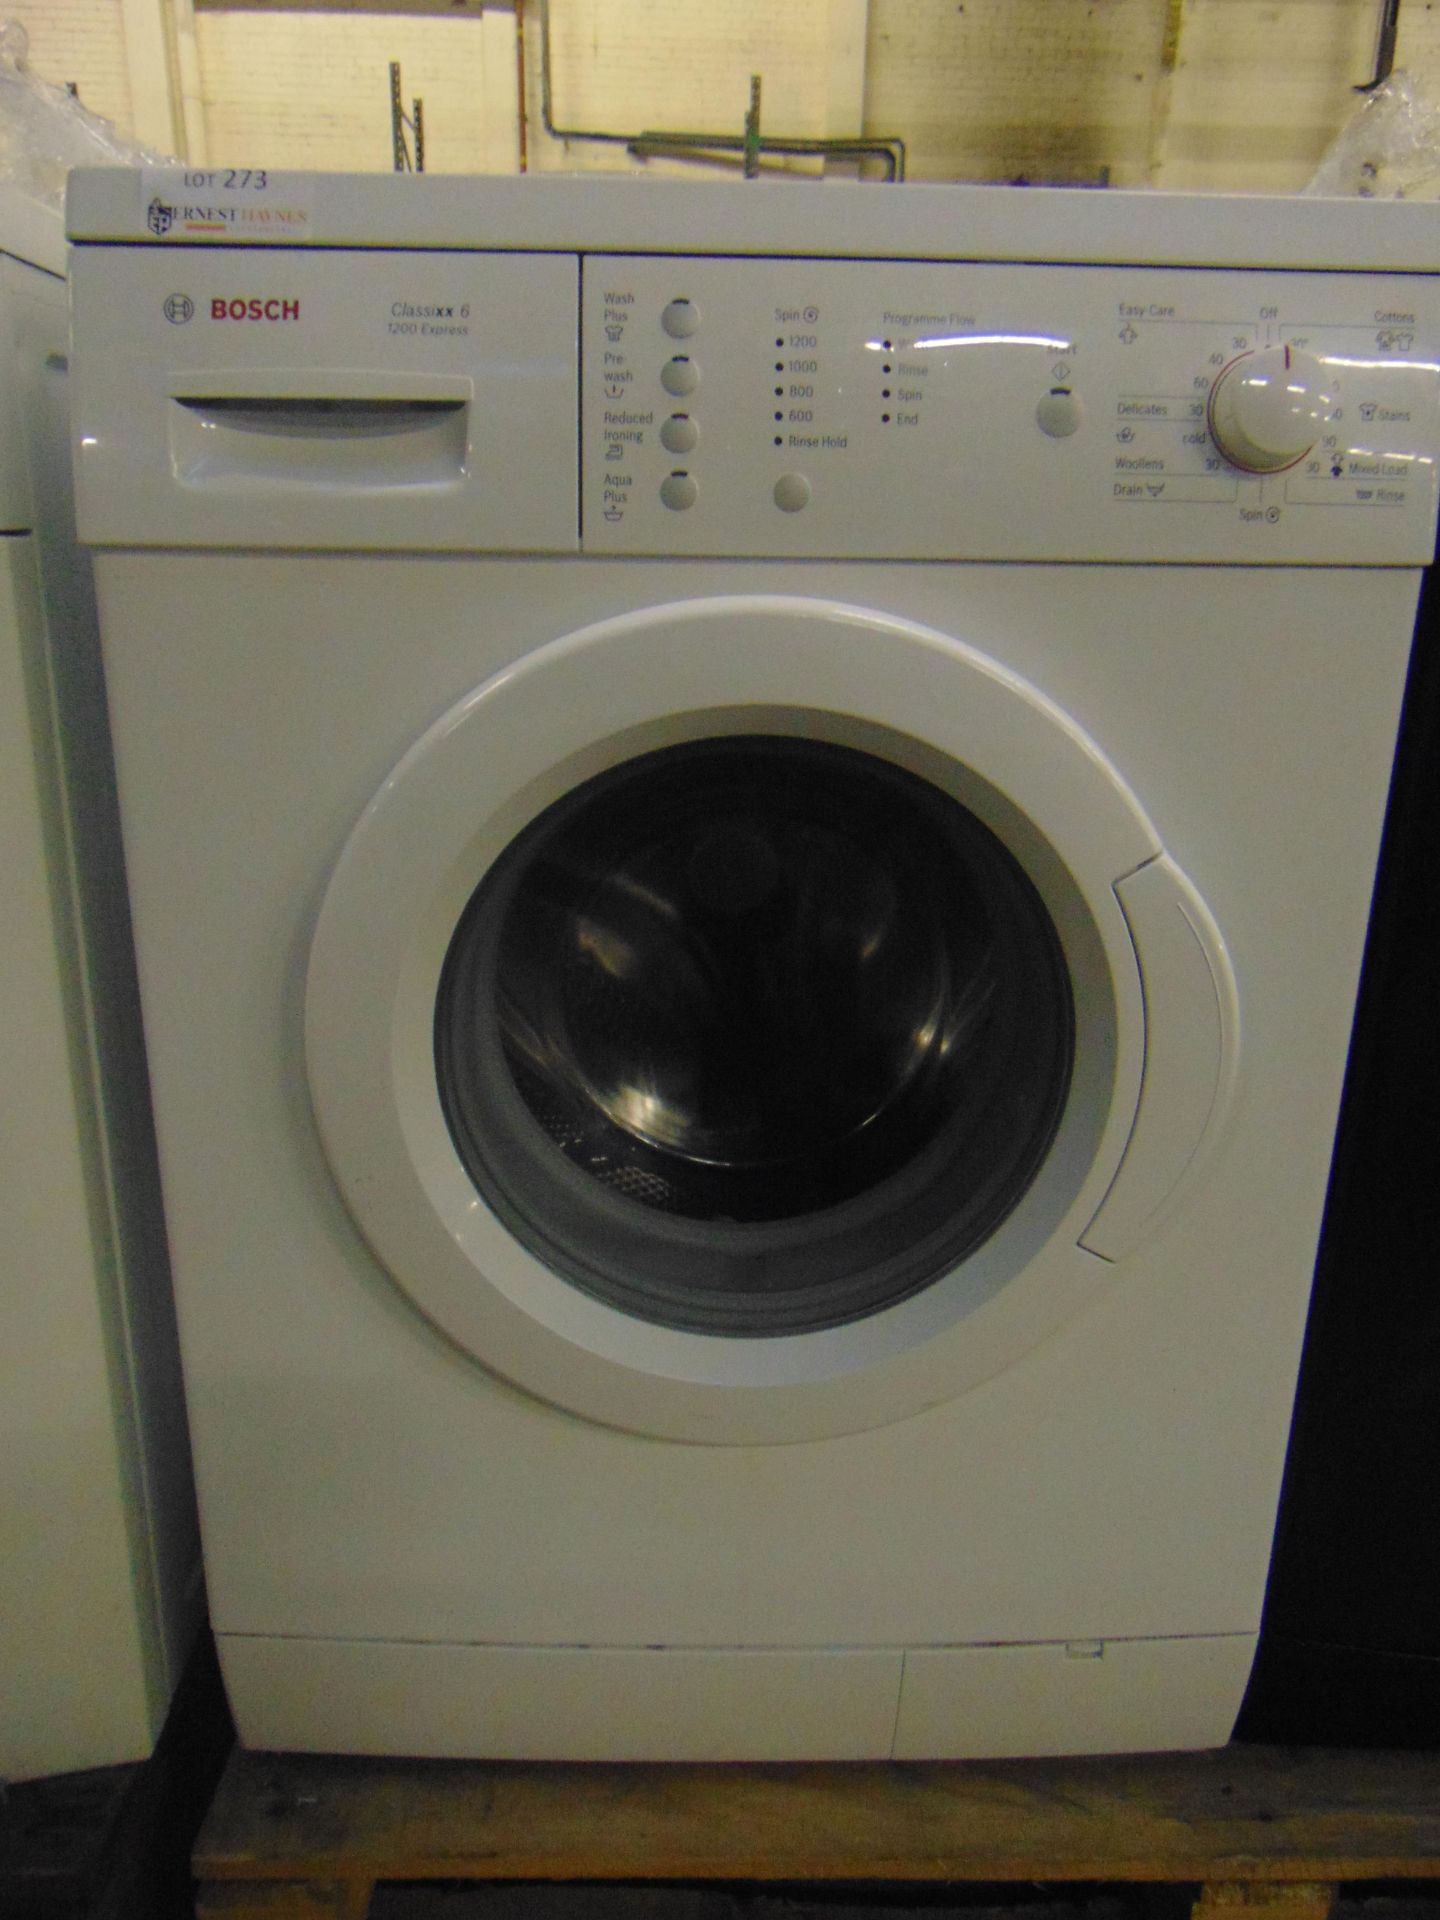 Bosch classixx 6, 1200 Express washing machine, Fully refurbished and working, 3 months warranty